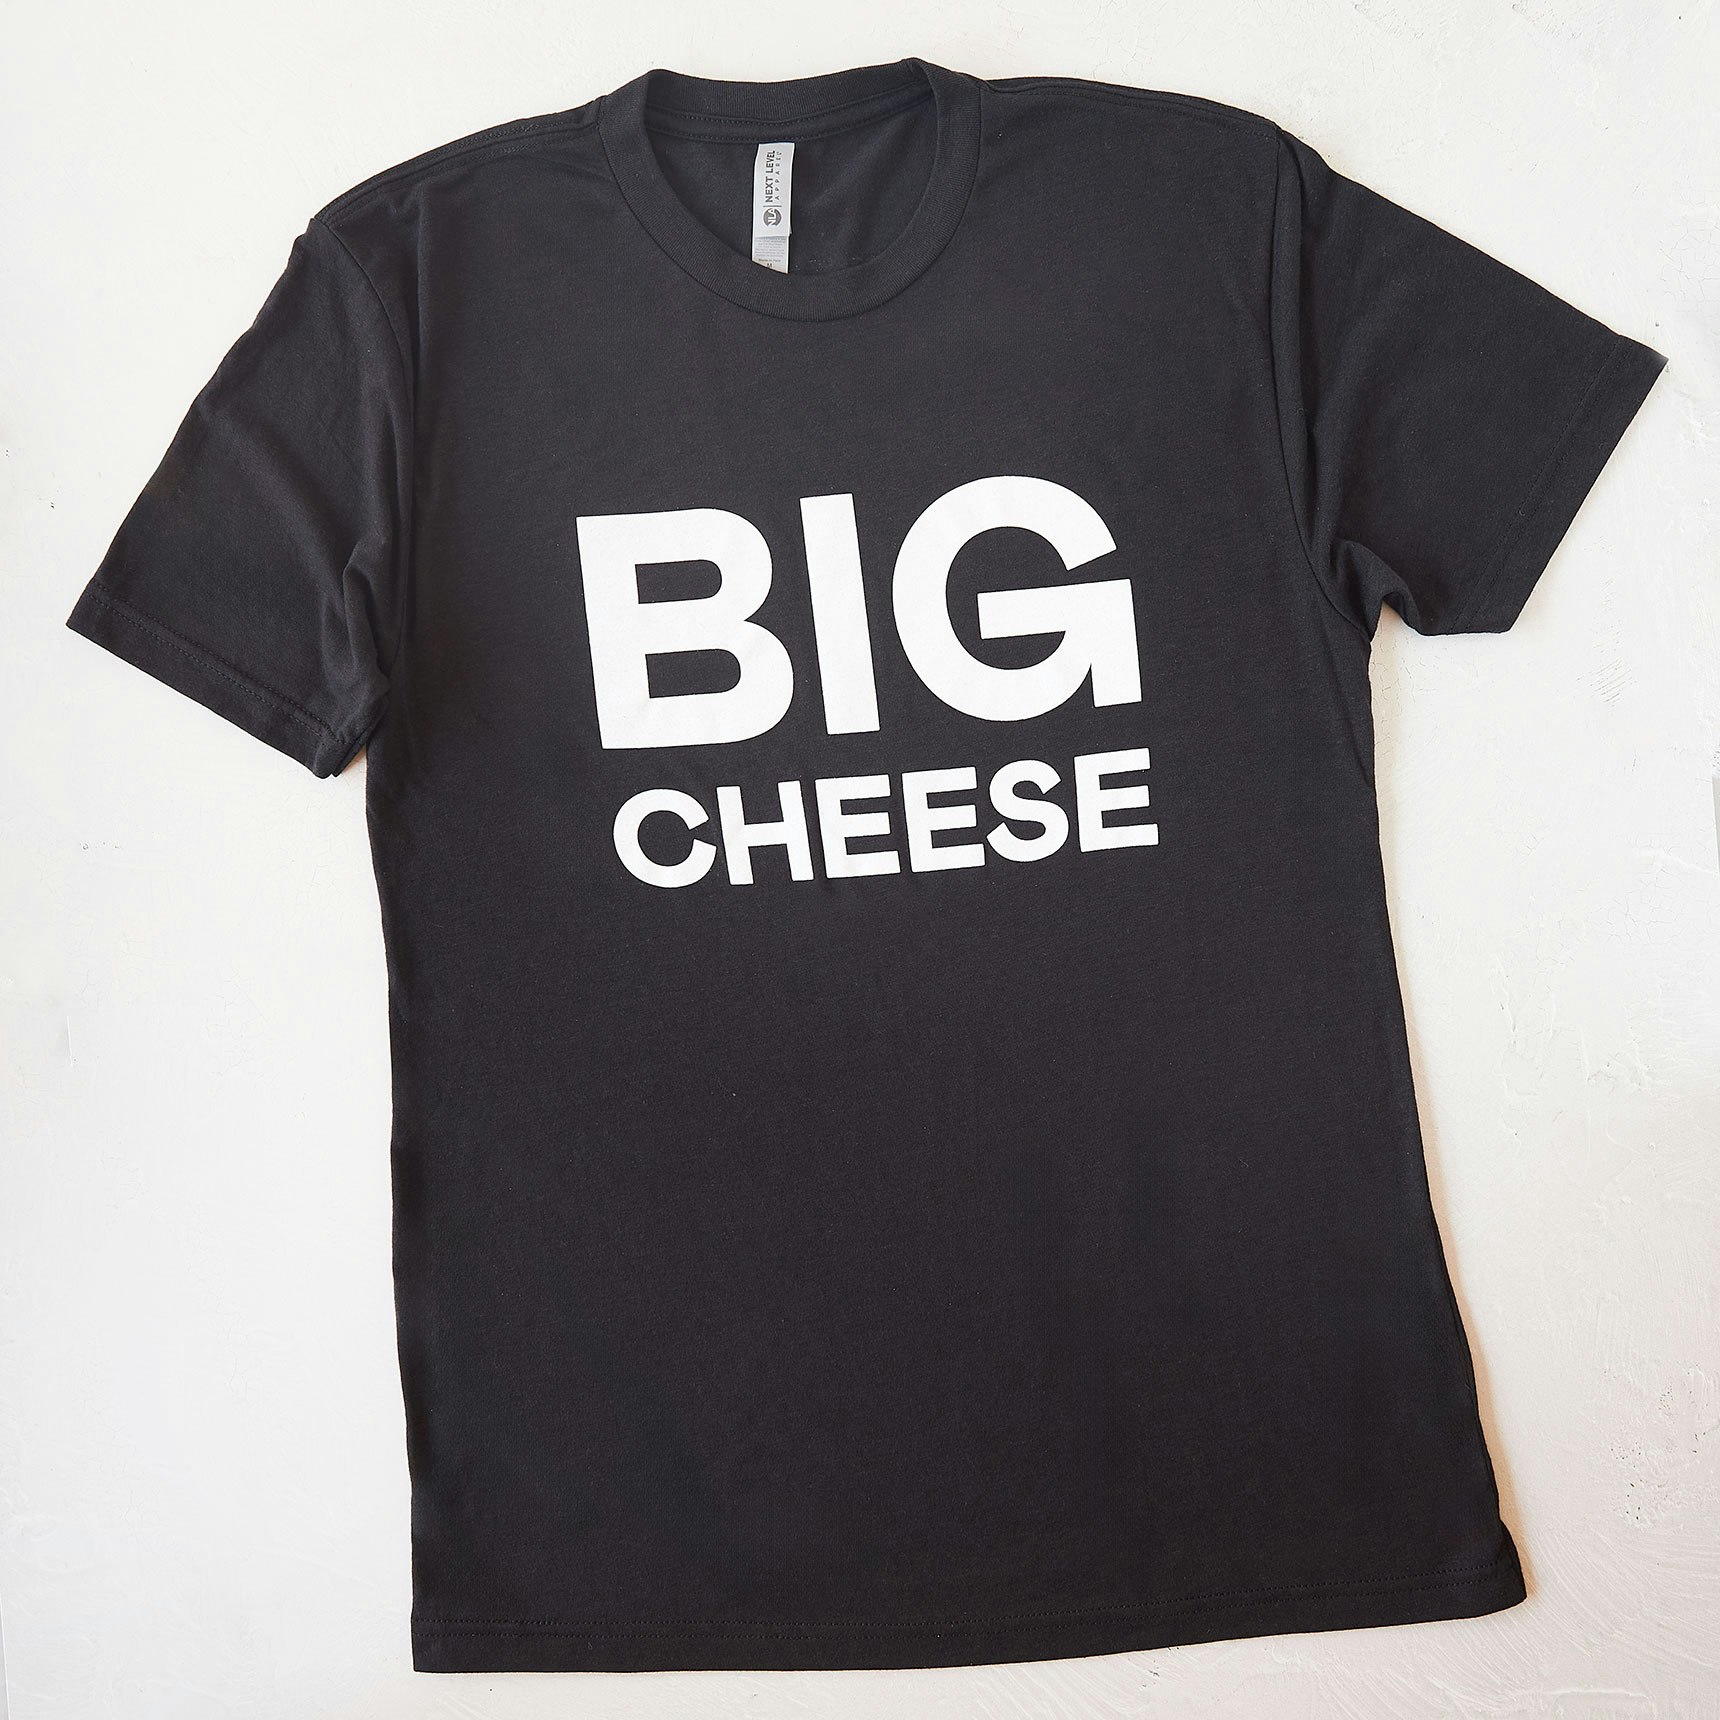 Murrays Big Cheese T Shirt housewares